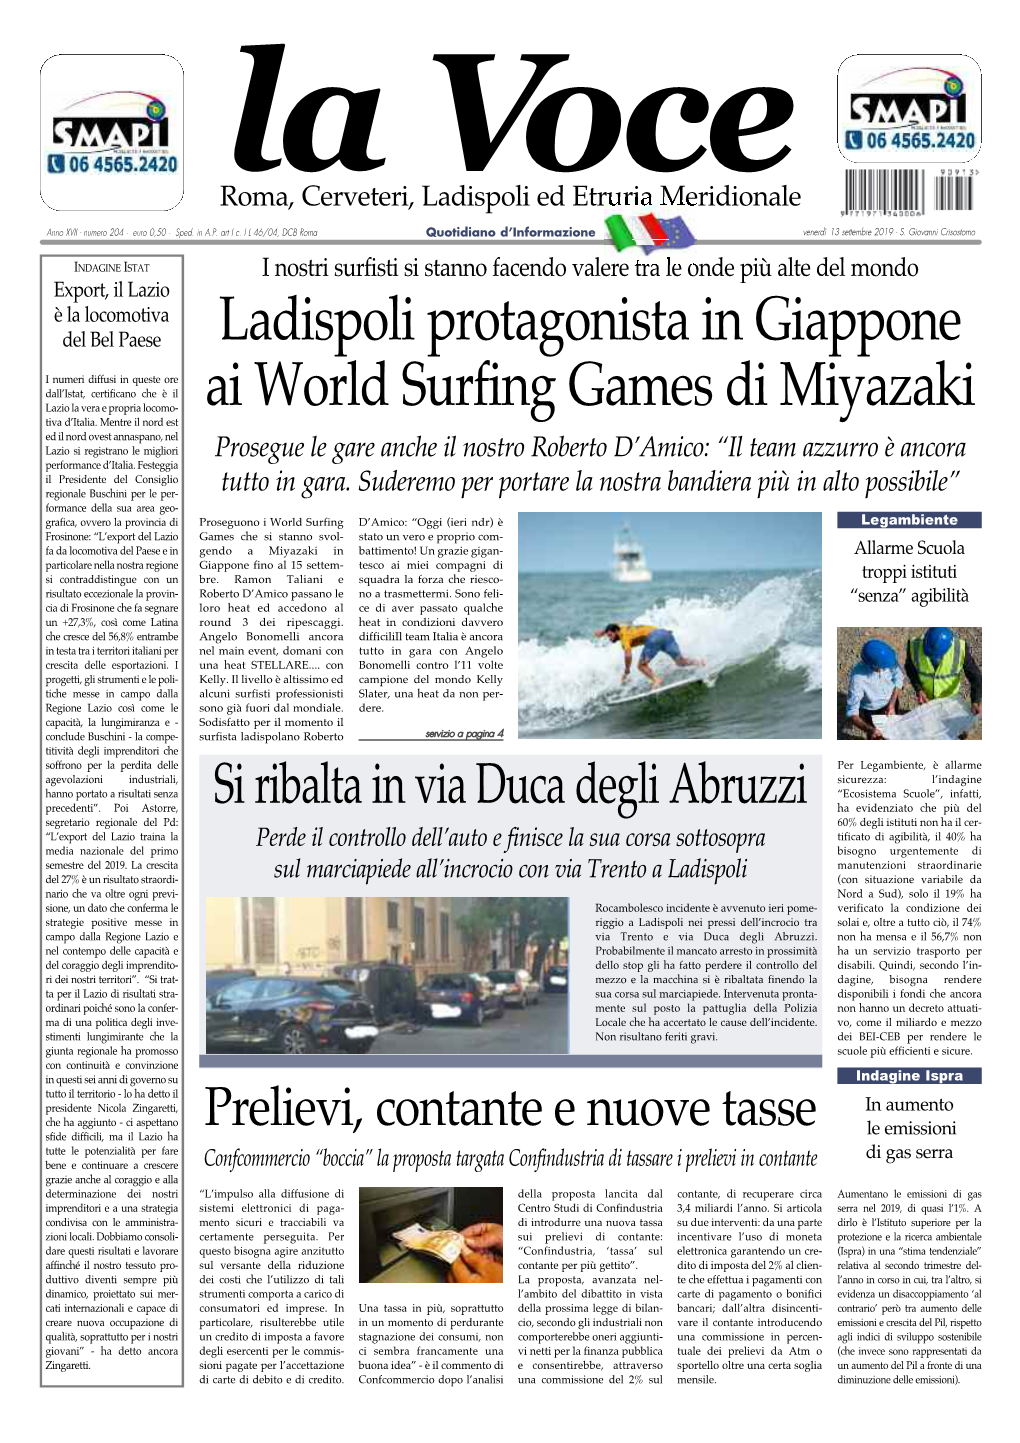 Ladispoli Protagonista in Giappone Ai World Surfing Games Di Miyazaki